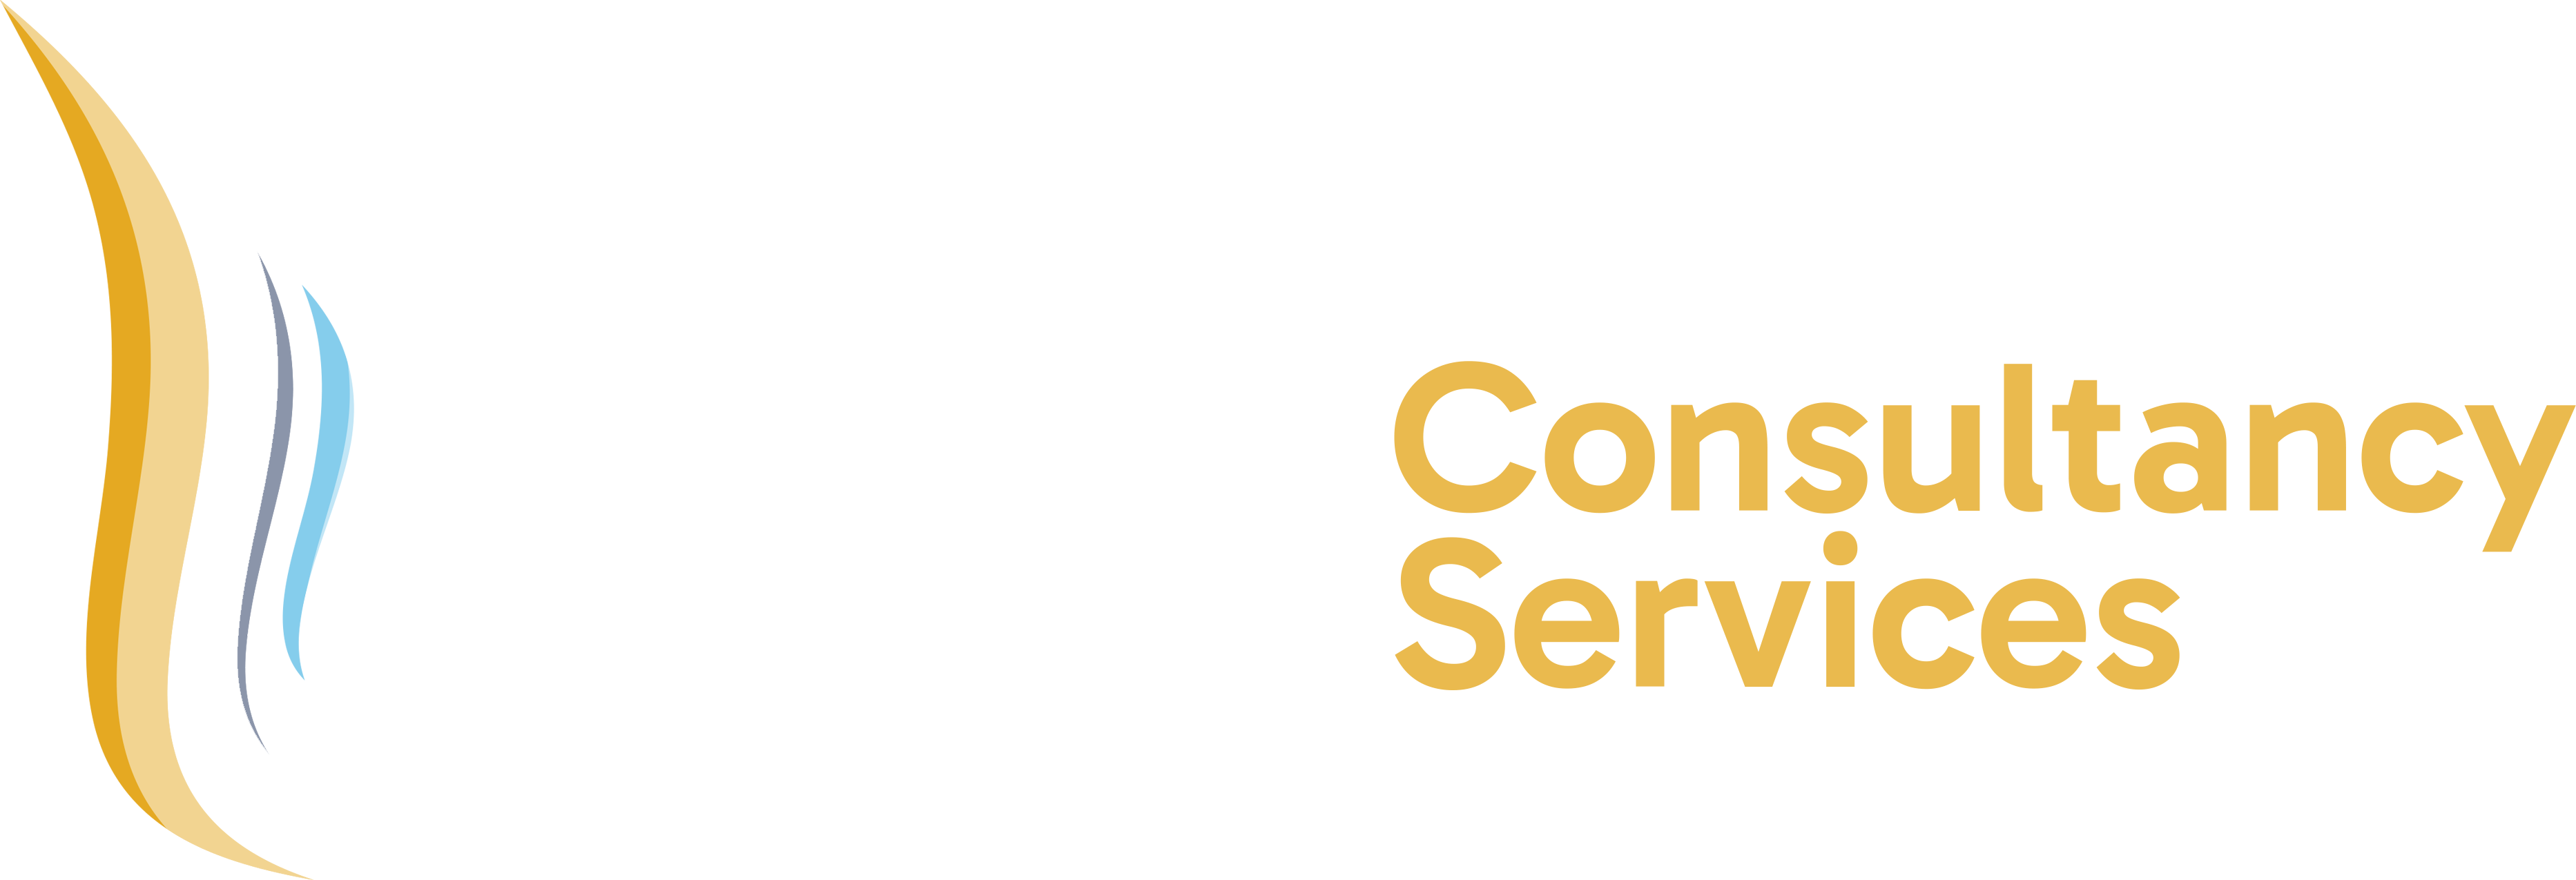 IAQ Consultancy Services Logo (White)